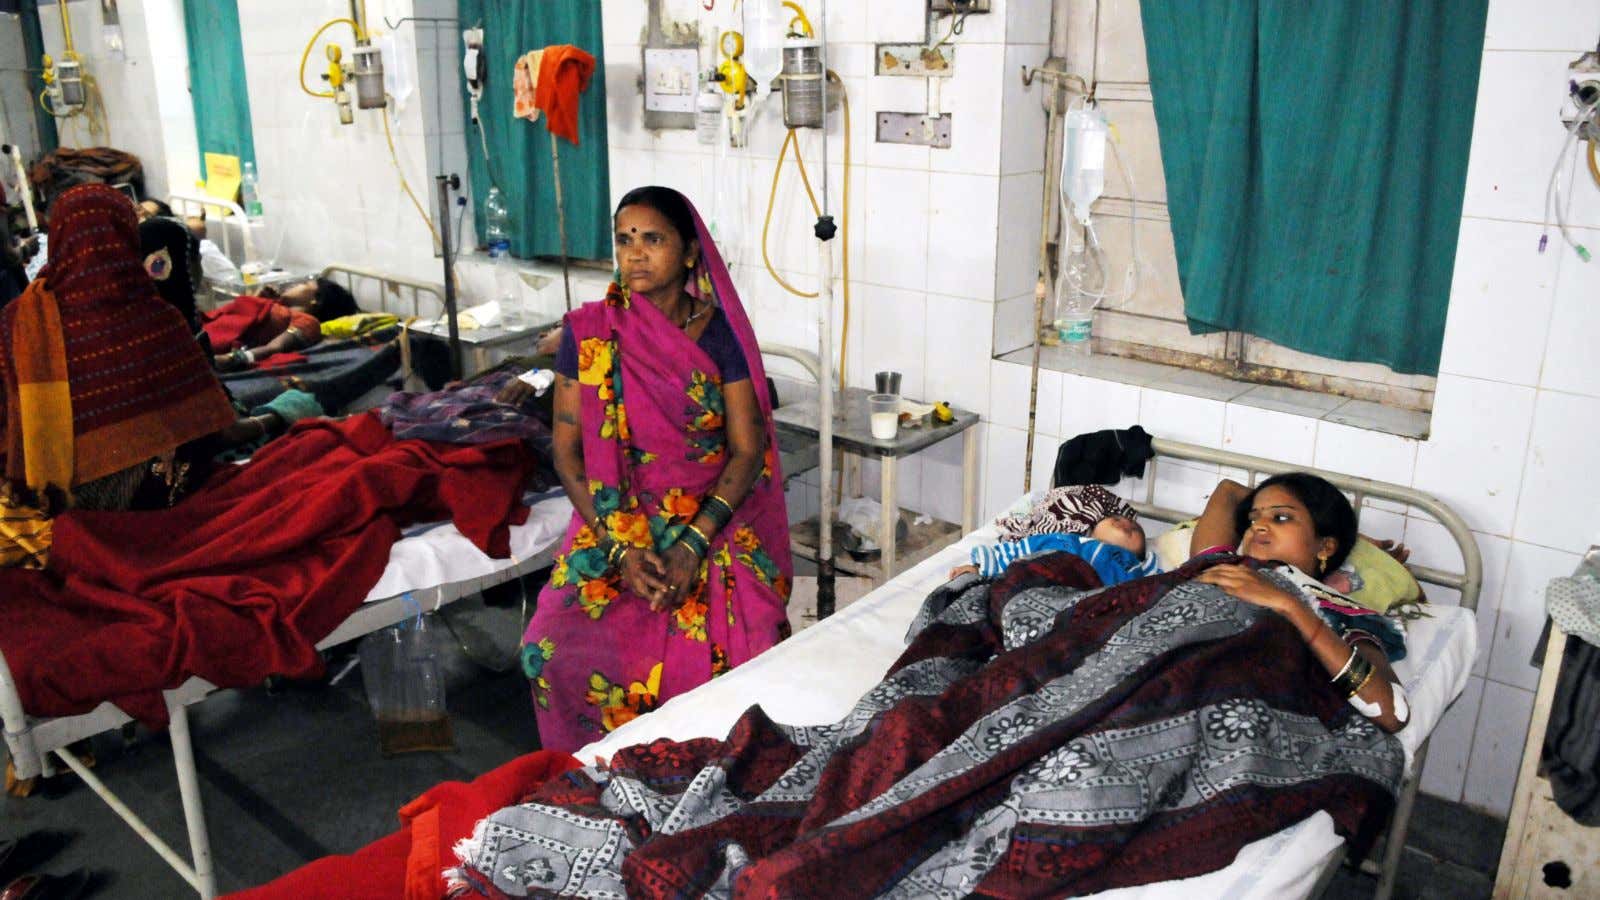 Dozens of women were hospitalized after botched sterilization surgeries.